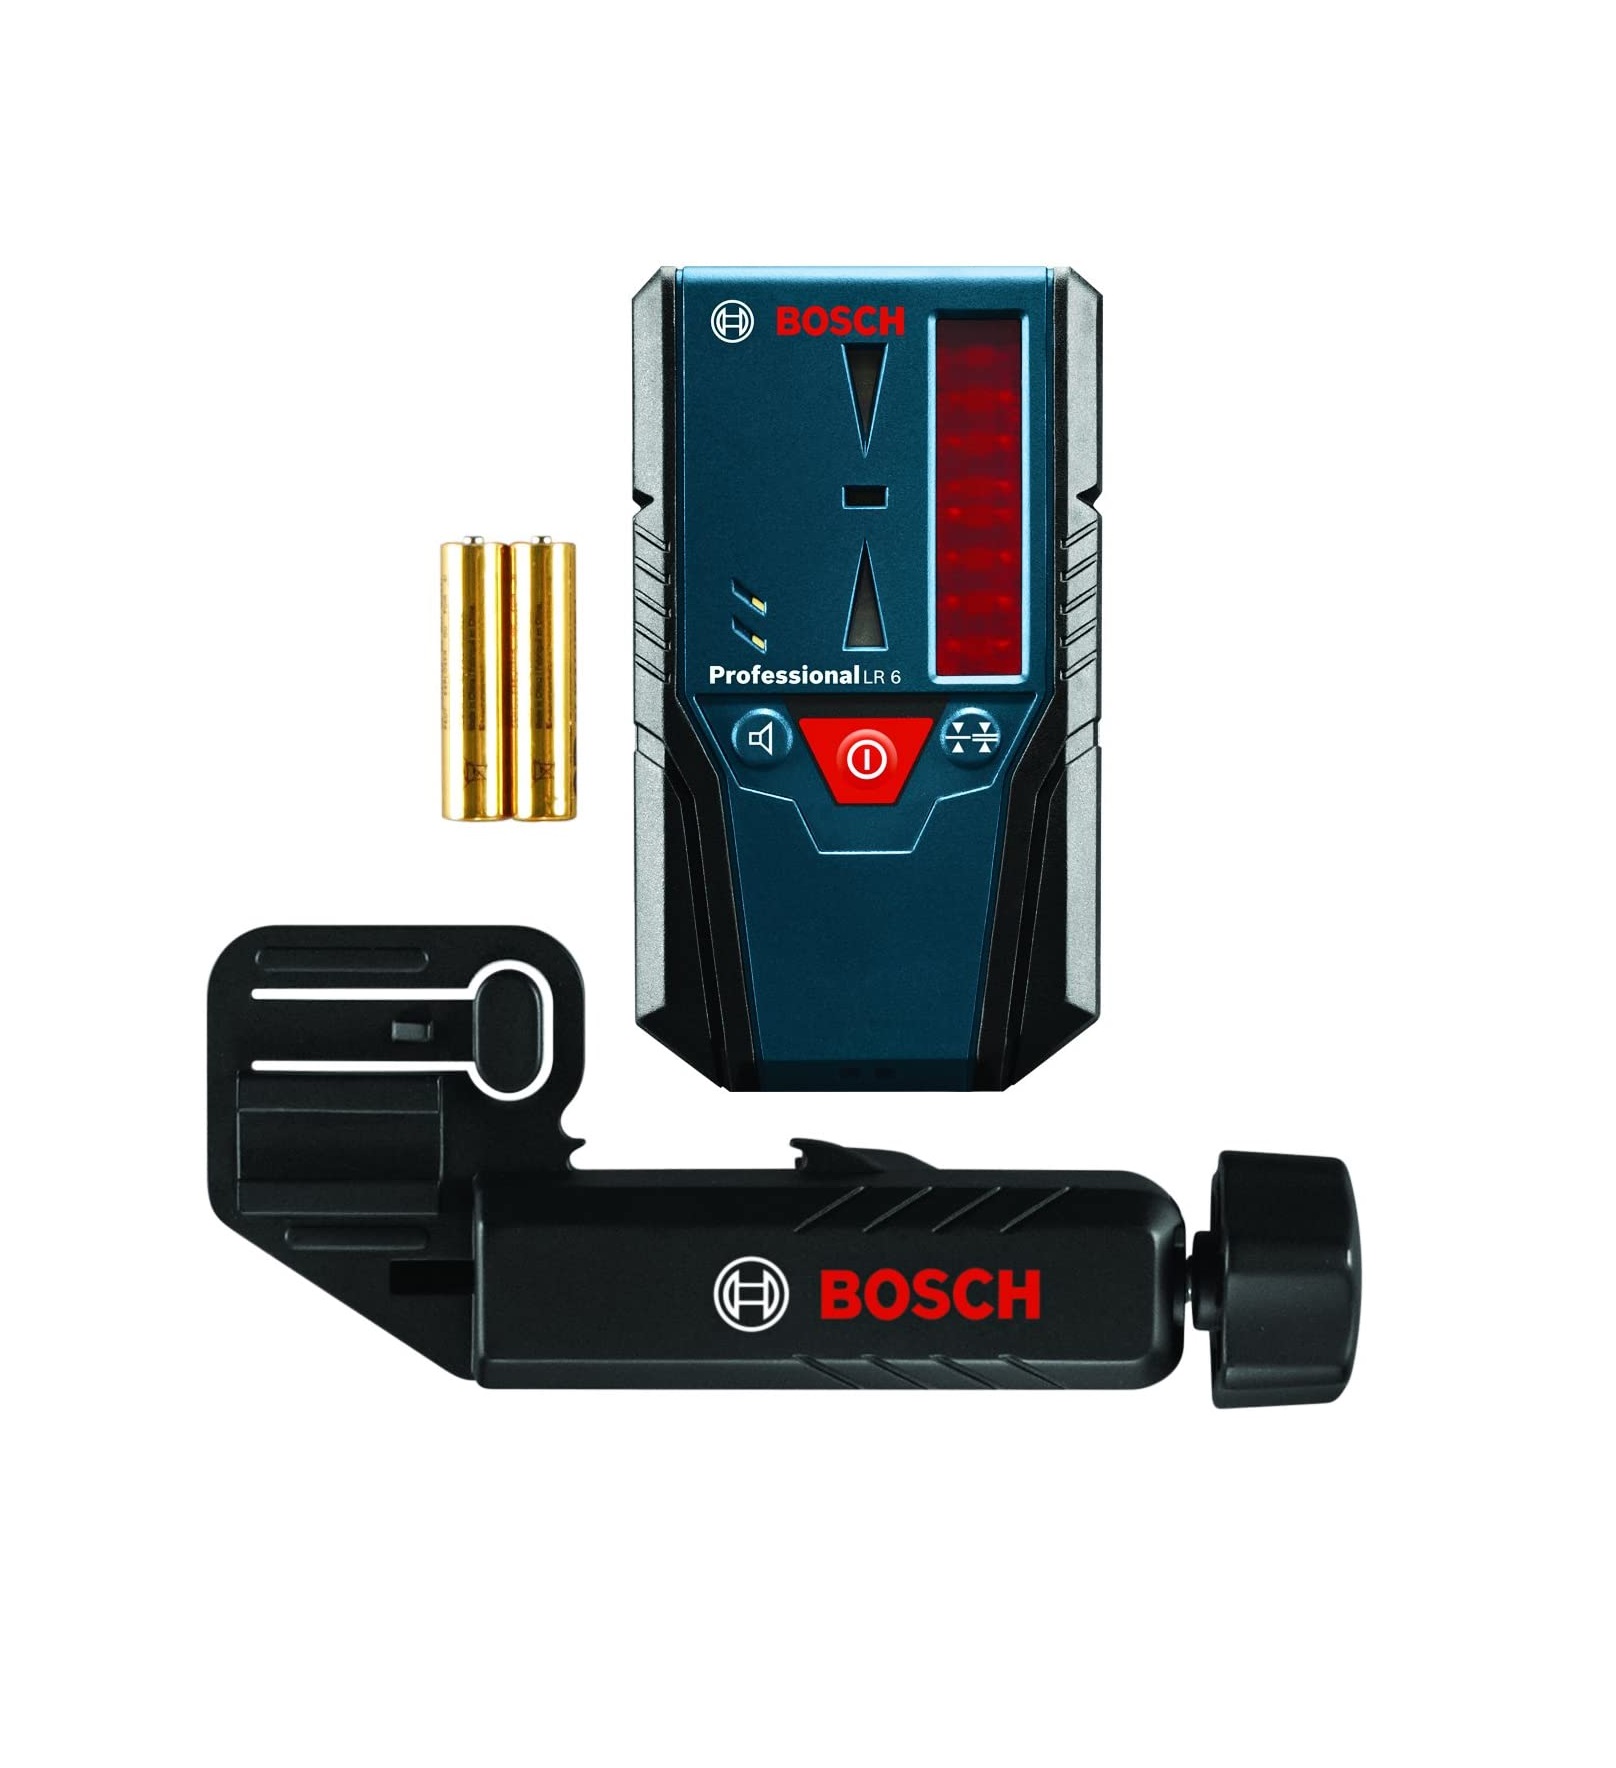 Bosch LR6 PROFESSIONAL330ft Line Laser Level Receiver for Red Beam Laser Leveling Tools